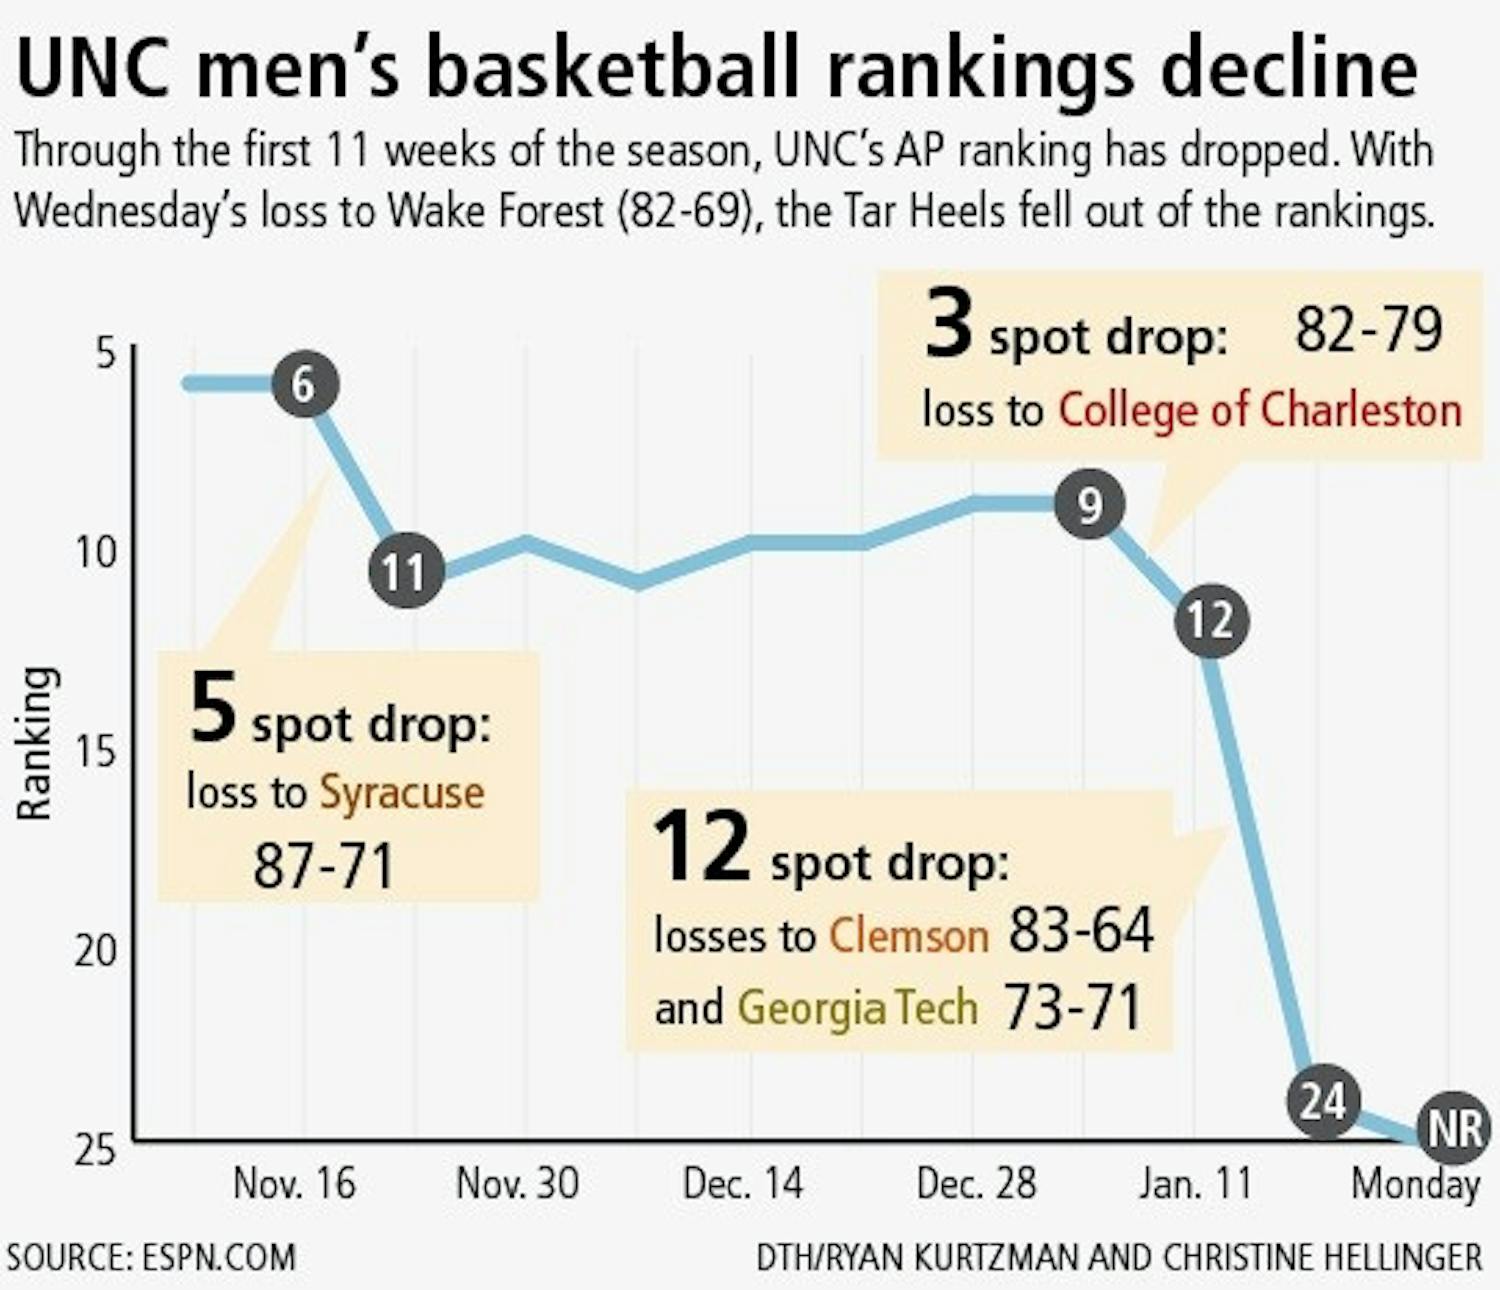 UNC men's basketball rankings decline. DTH/ Ryan Kurtzman and Christine Hellinger